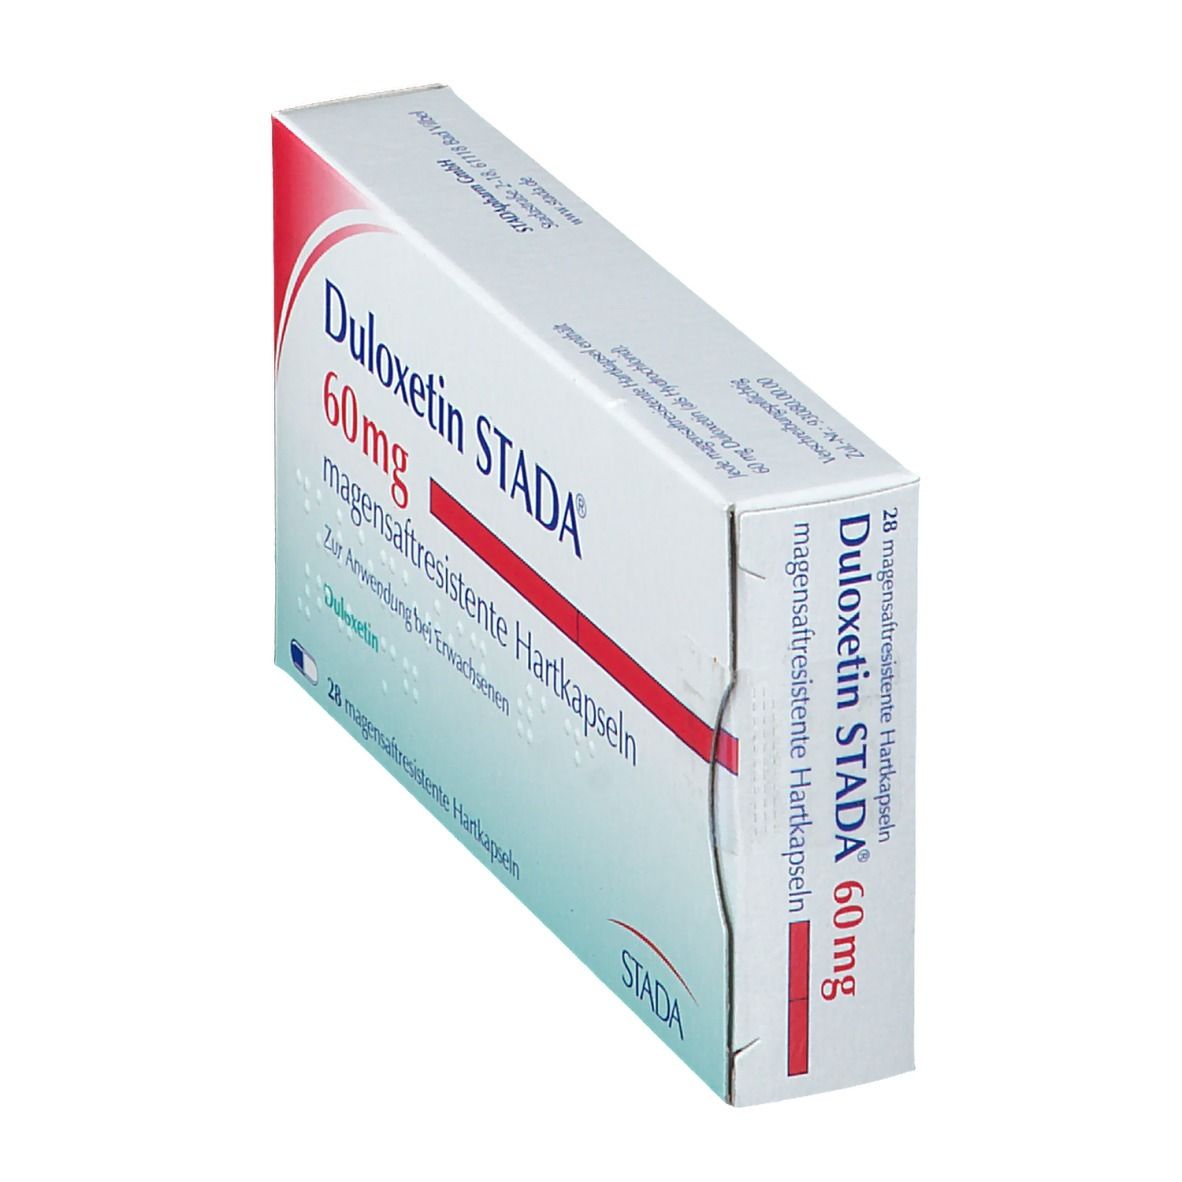 Duloxetin STADA® 60 mg magensaftresistente Hartkapseln